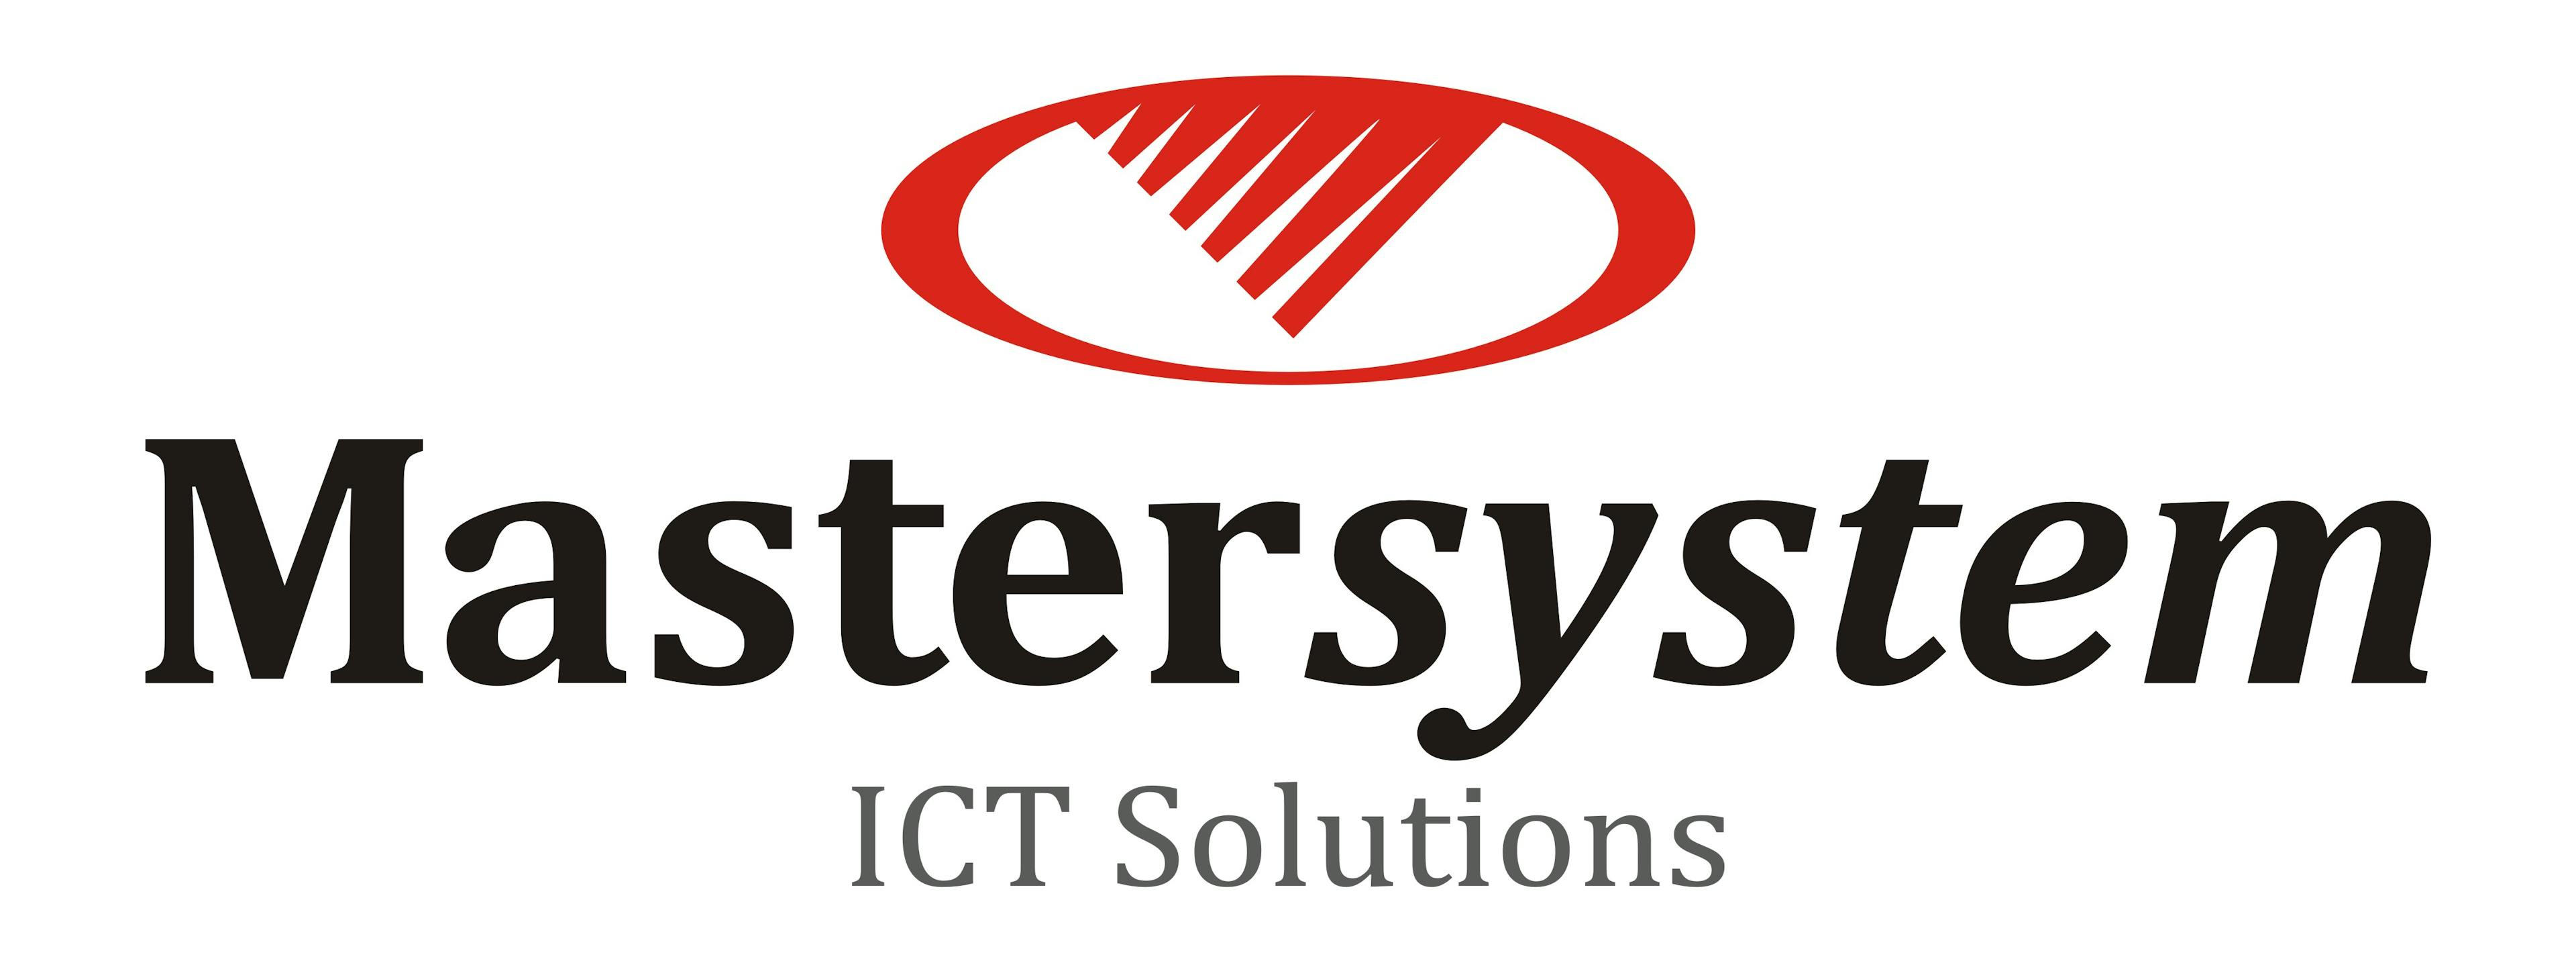 PT Mastersystem Infotama logo